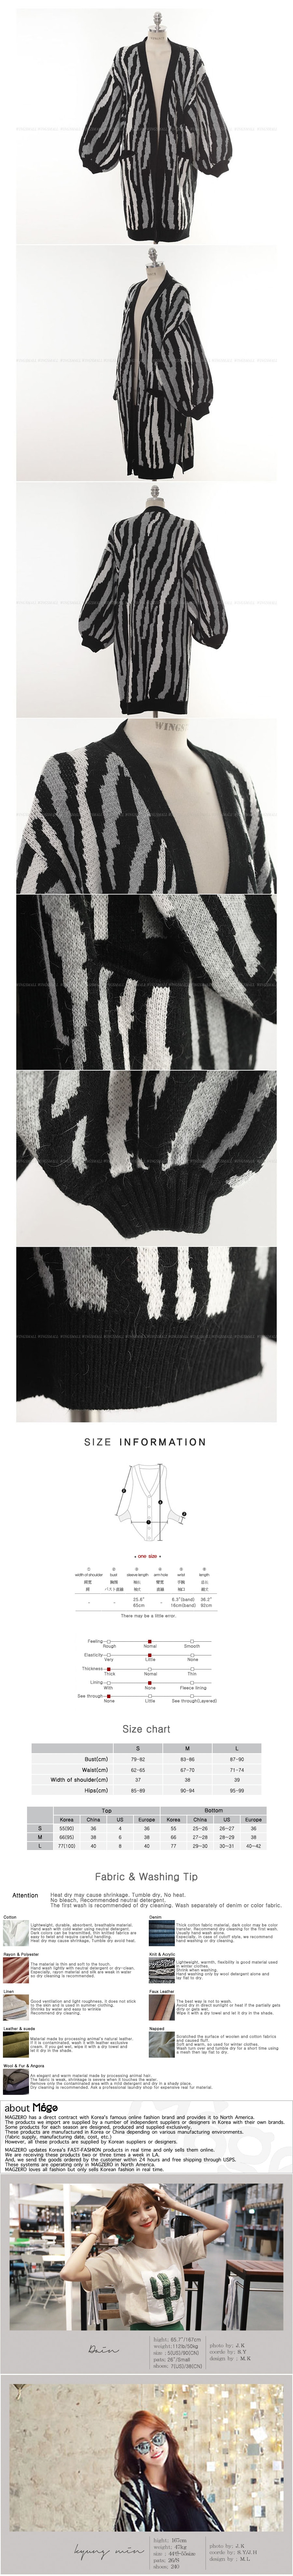 MAGZERO [限量销售] 斑马纹泡芙袖编制羊毛开襟衫 #黑色 均码(Free)